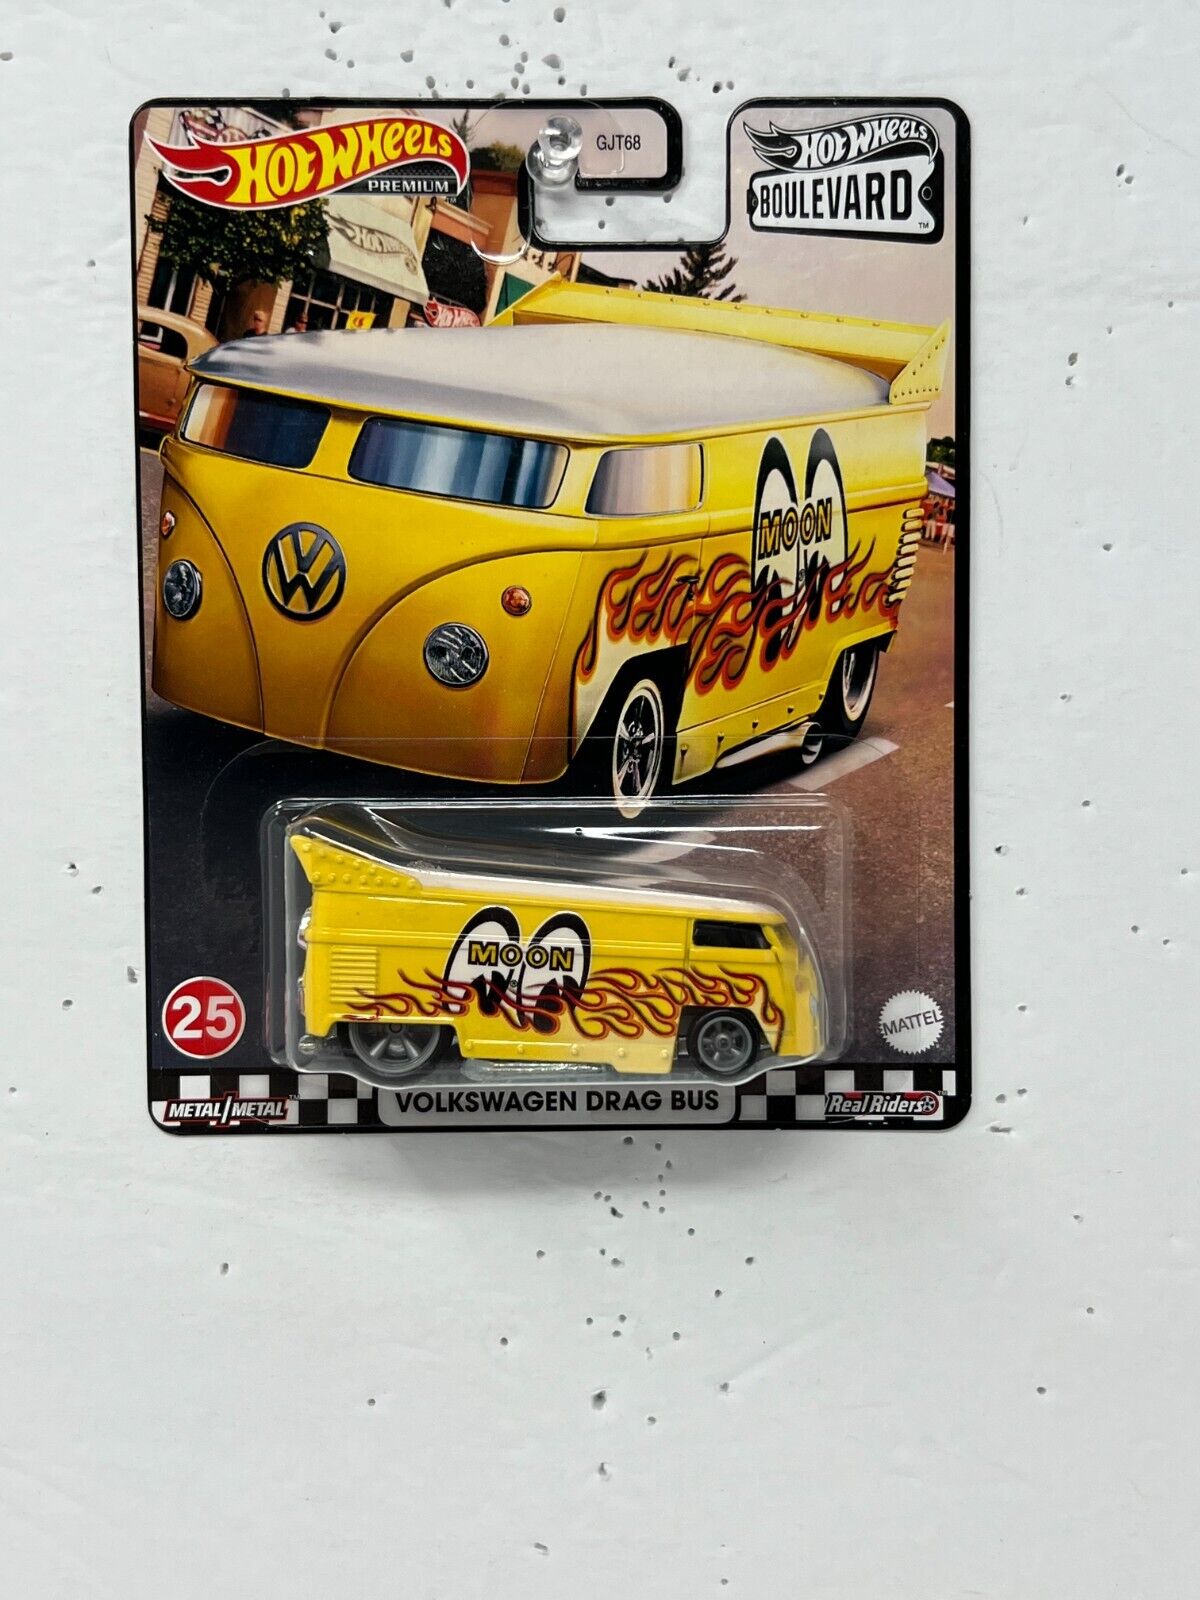 Hot Wheels Premium Boulevard Volkswagen Drag Bus 1:64 Diecast